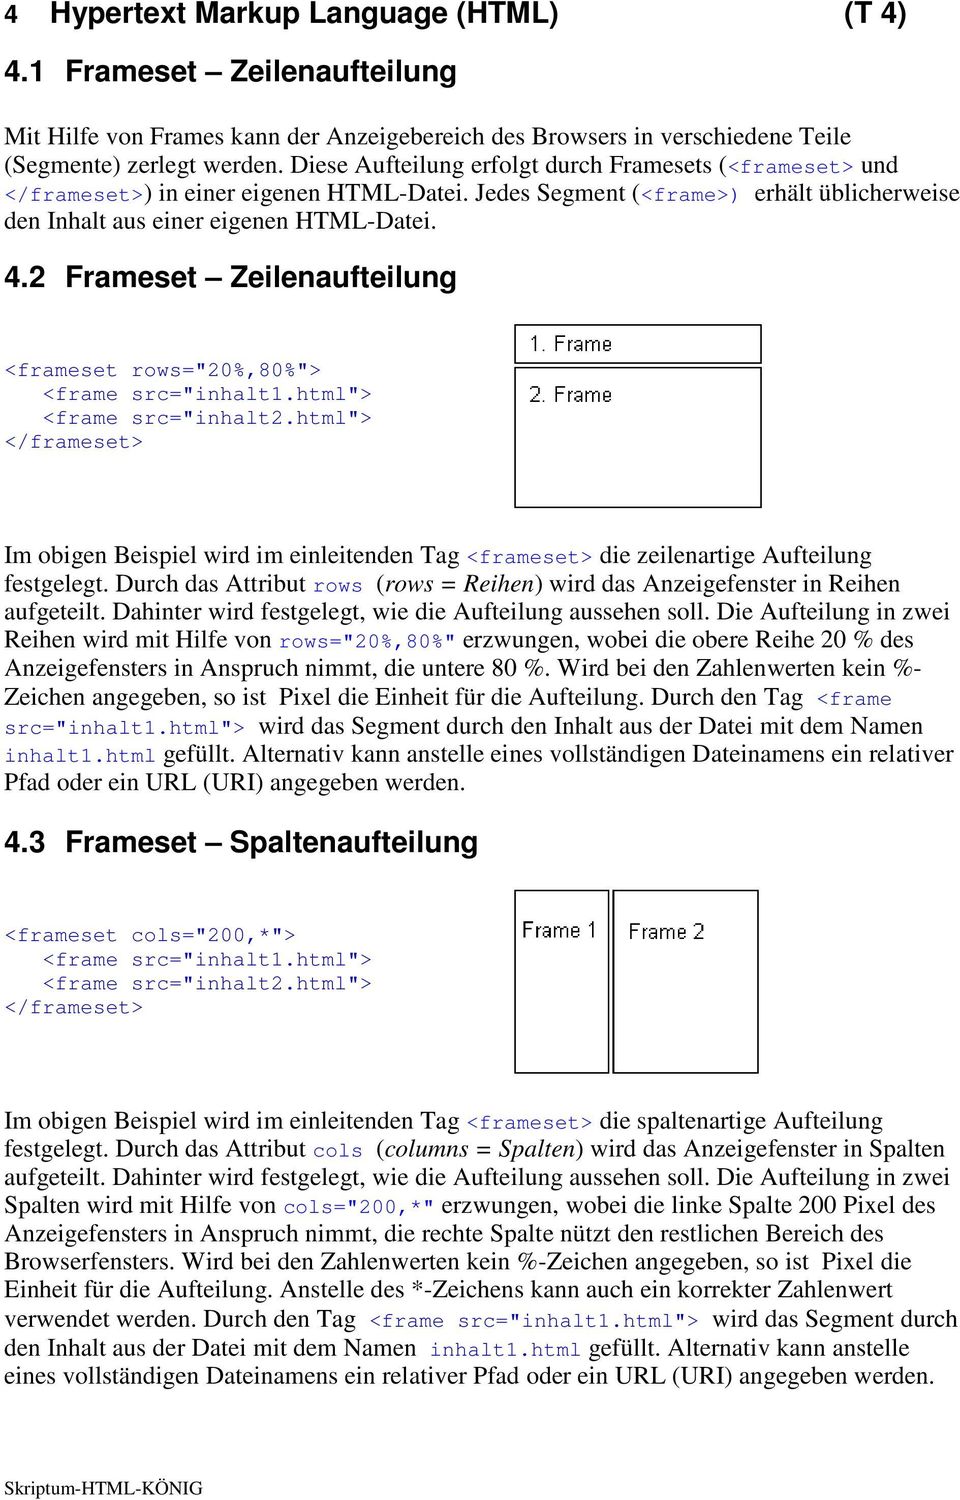 2 Frameset Zeilenaufteilung <frameset rows="20%,80%"> <frame src="inhalt1.html"> <frame src="inhalt2.